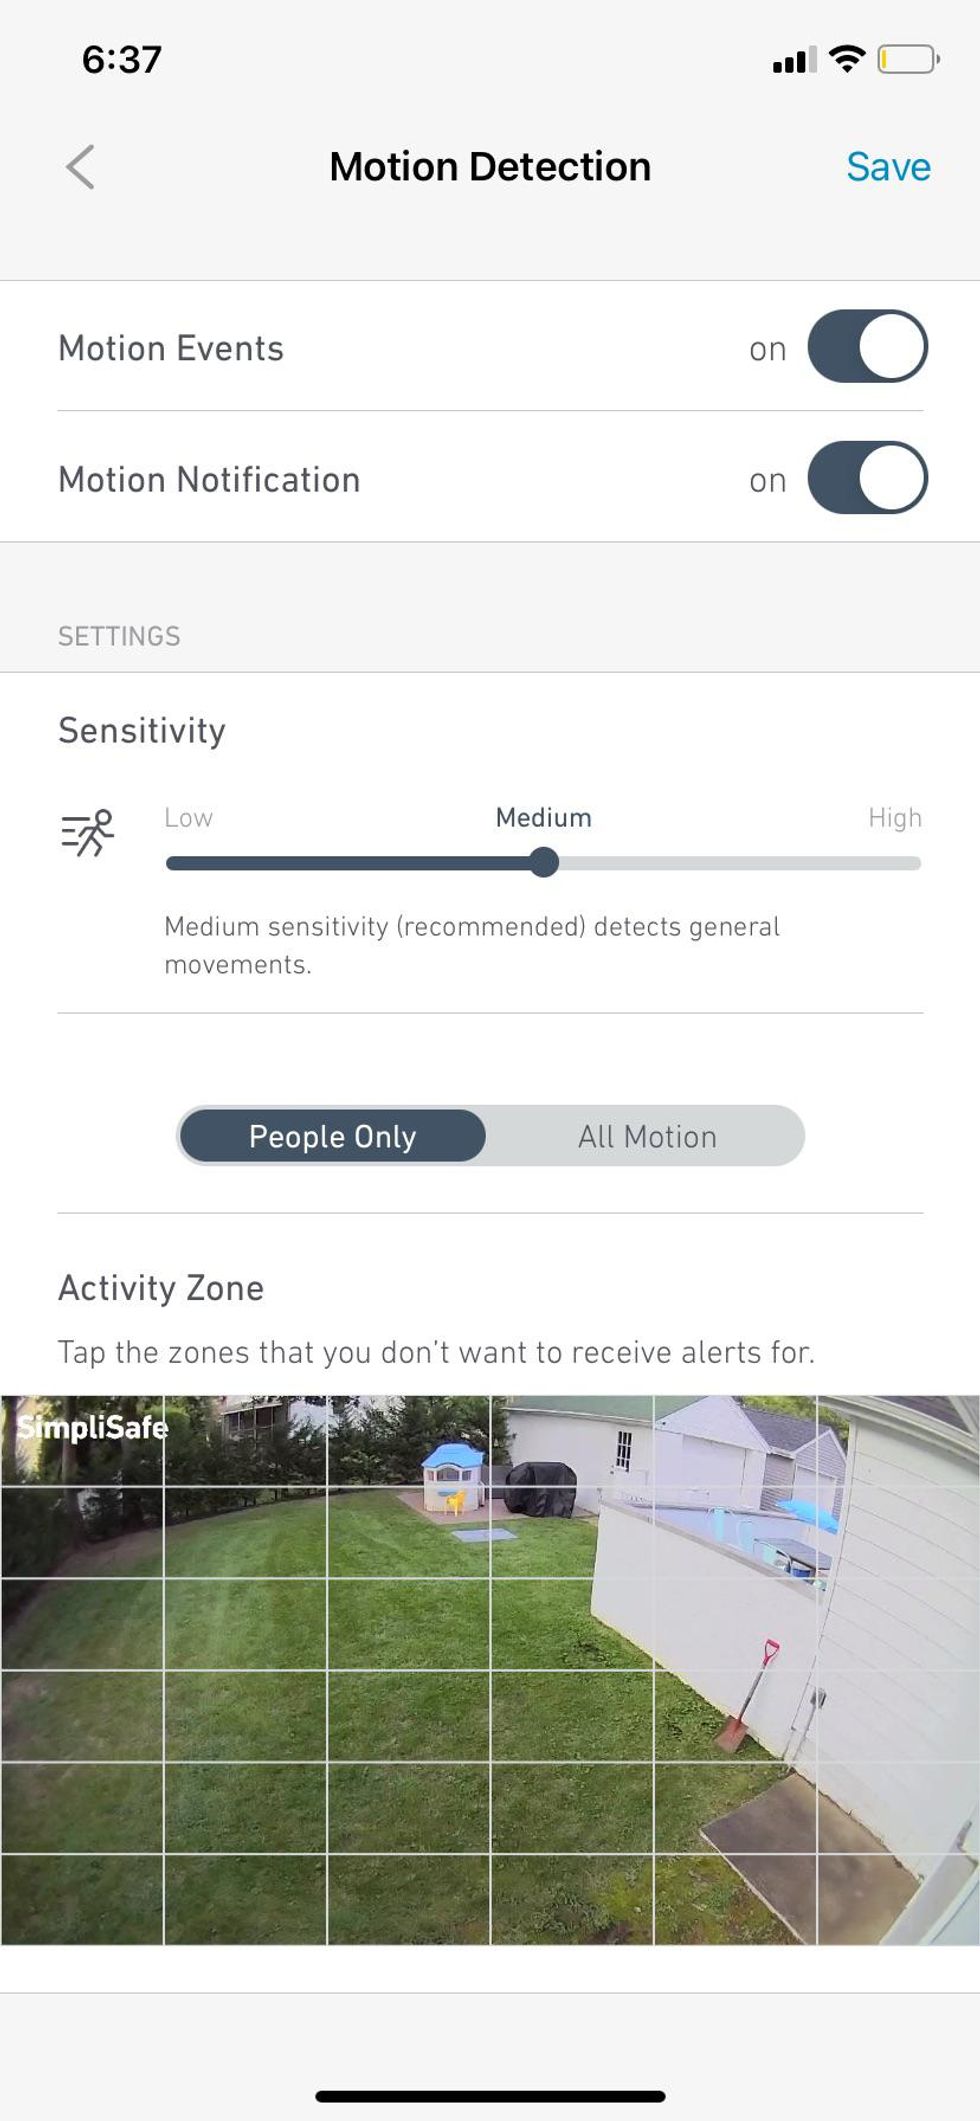 Setup motion zone detection for simplisafe cameras in app.